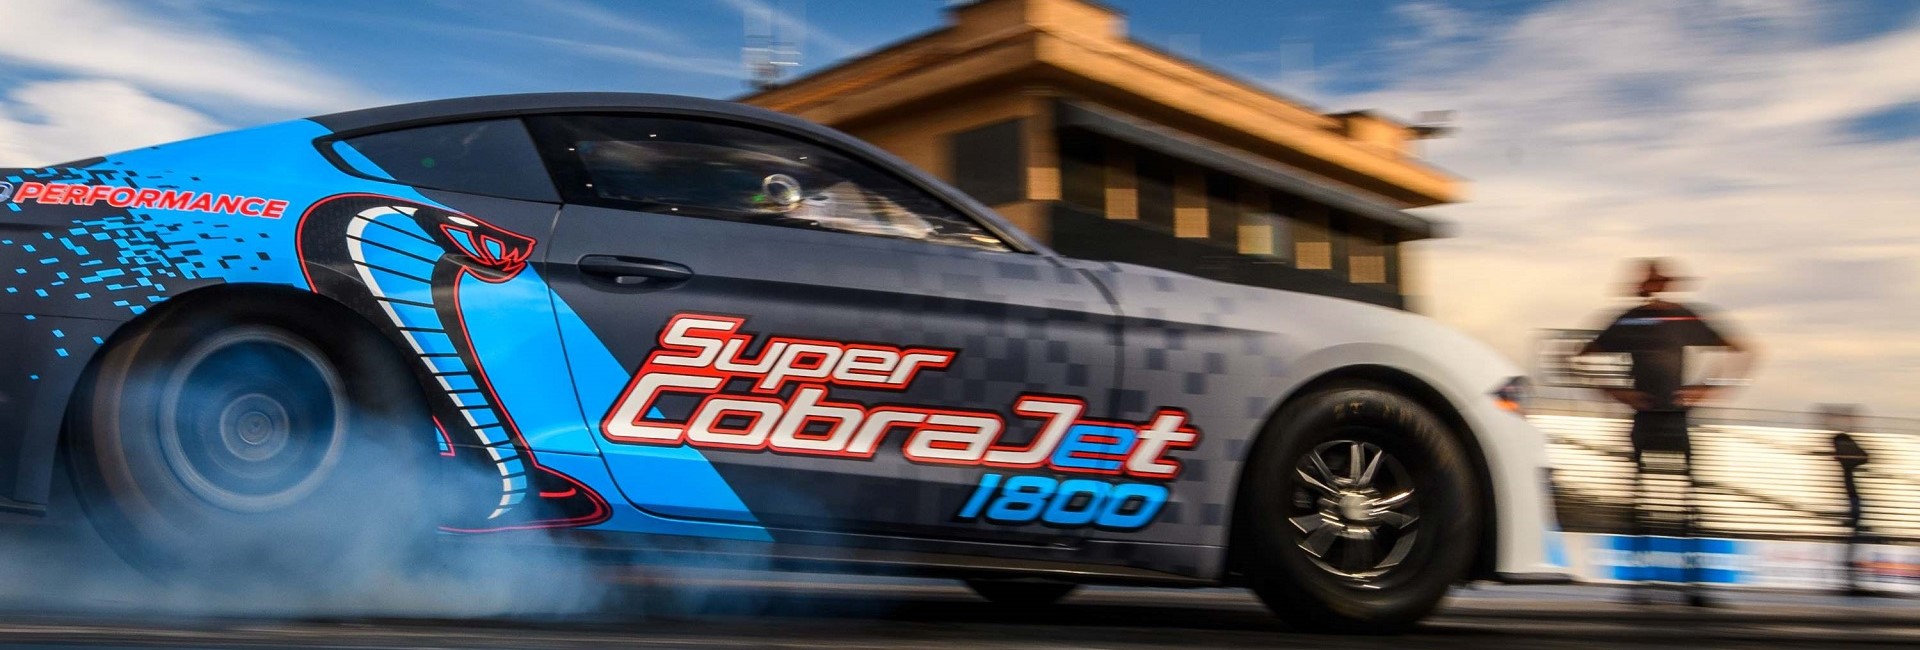 Mustang-Super-Cobra